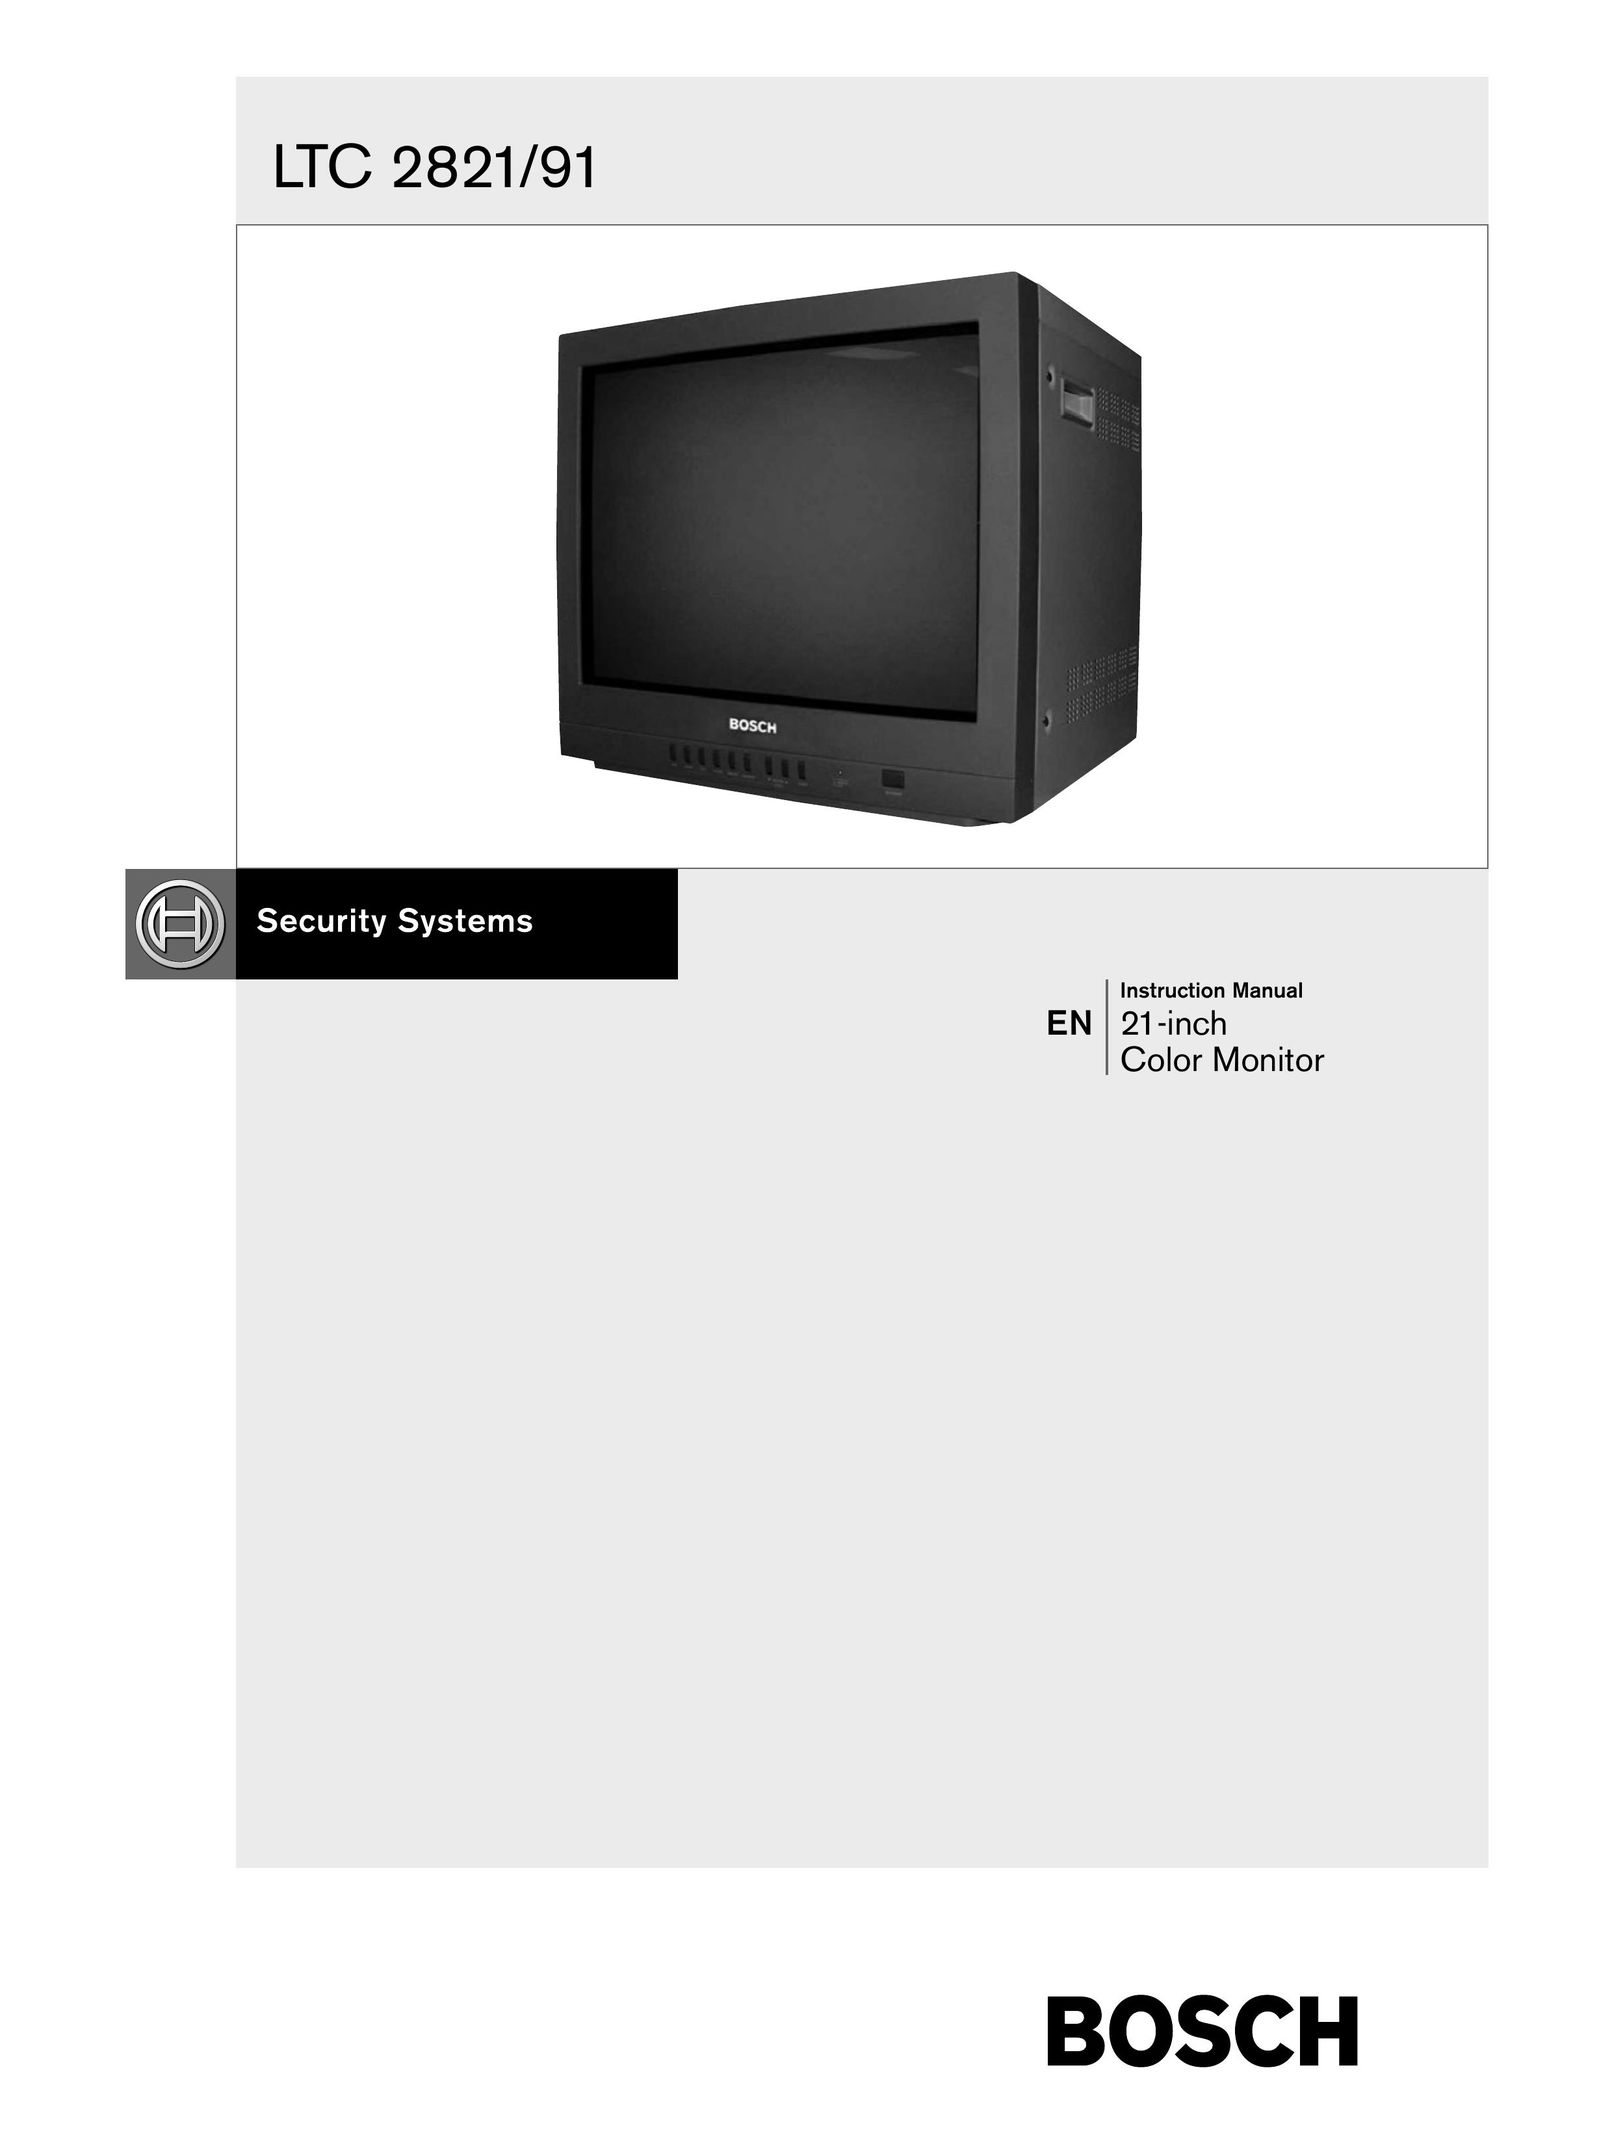 Bosch Appliances LTC 2891 CRT Television User Manual